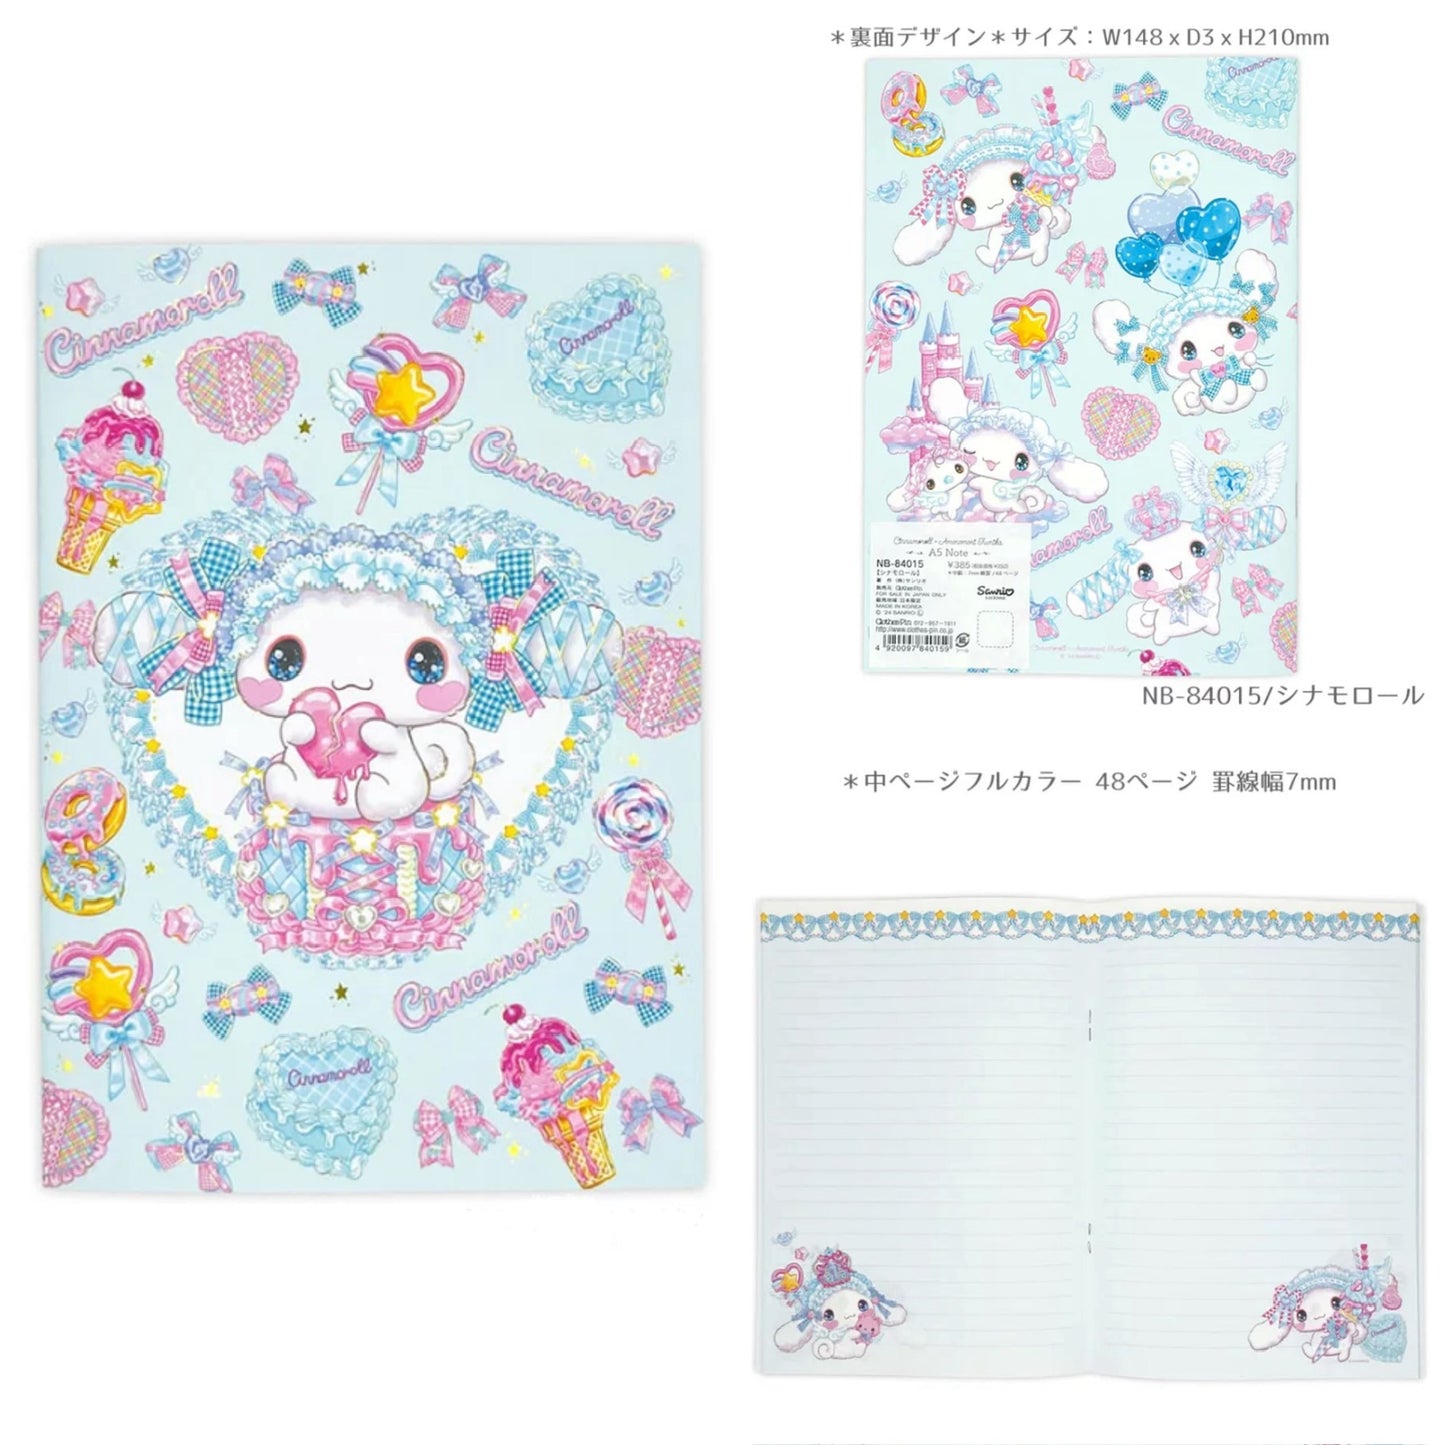 【Order】Sanrio x Amenomori Fumika Stationery Series - A5 Notebook